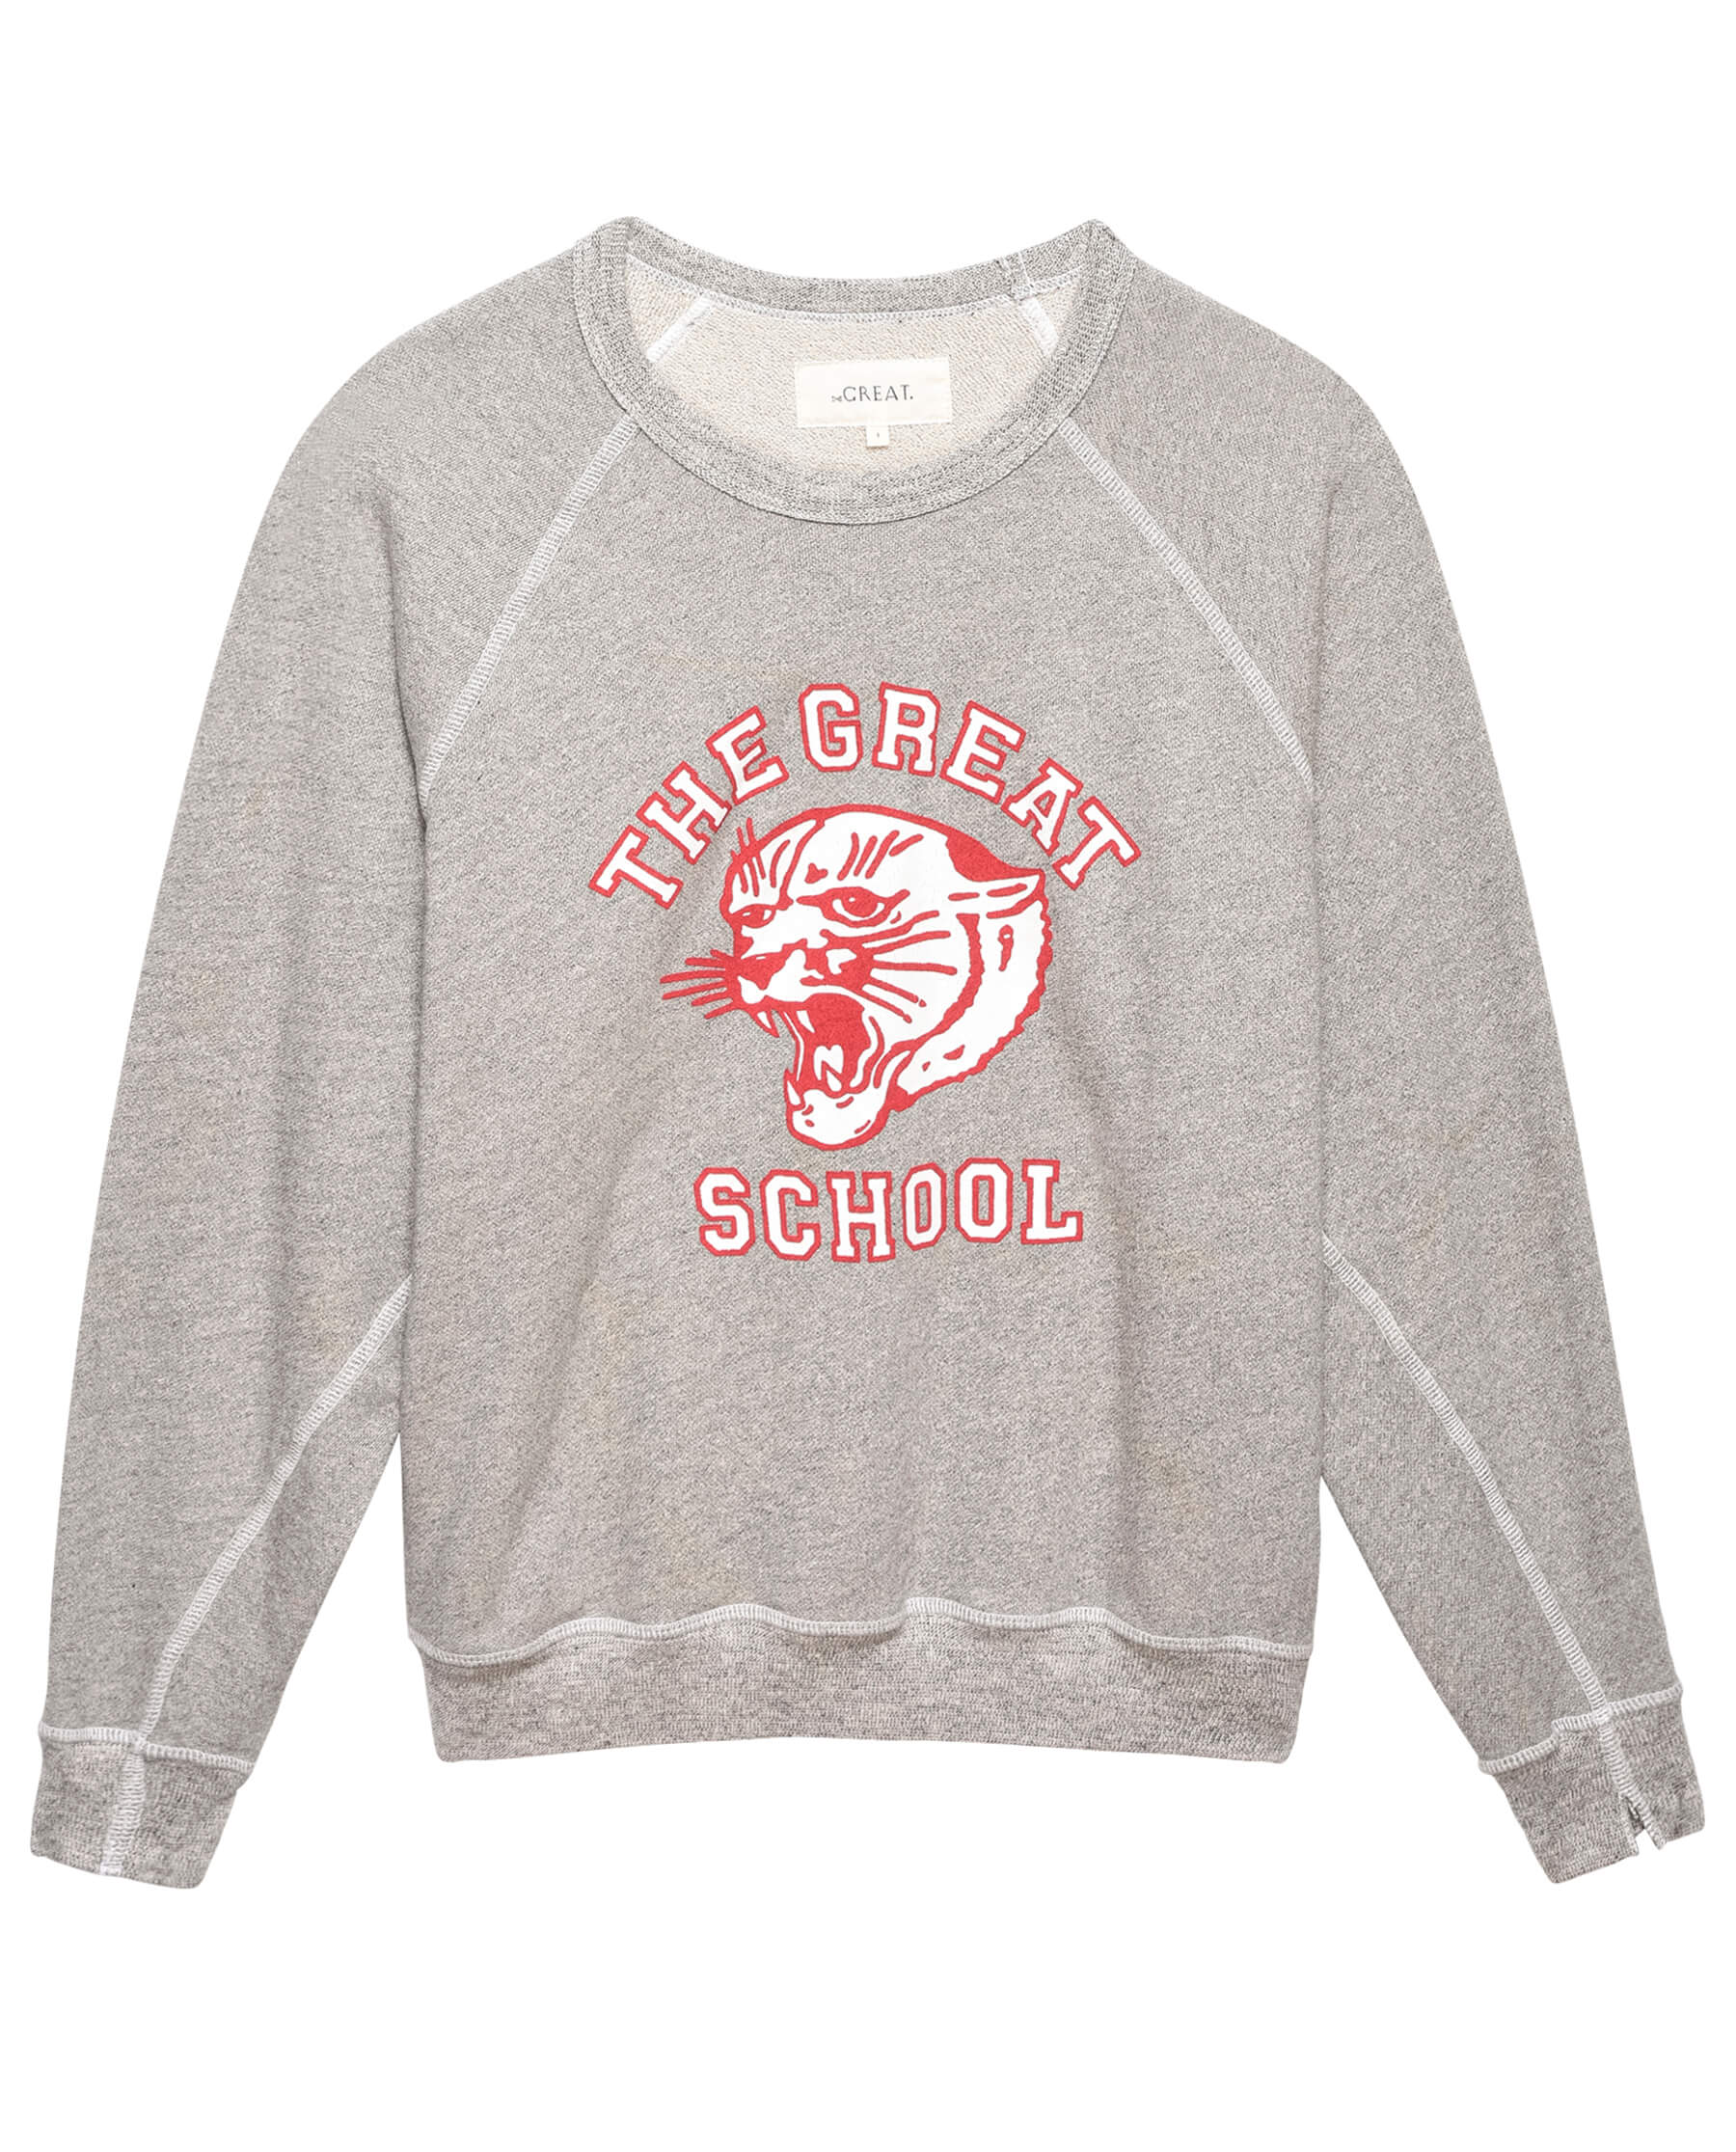 The College Sweatshirt. Graphic -- Varsity Grey with Bobcat Graphic